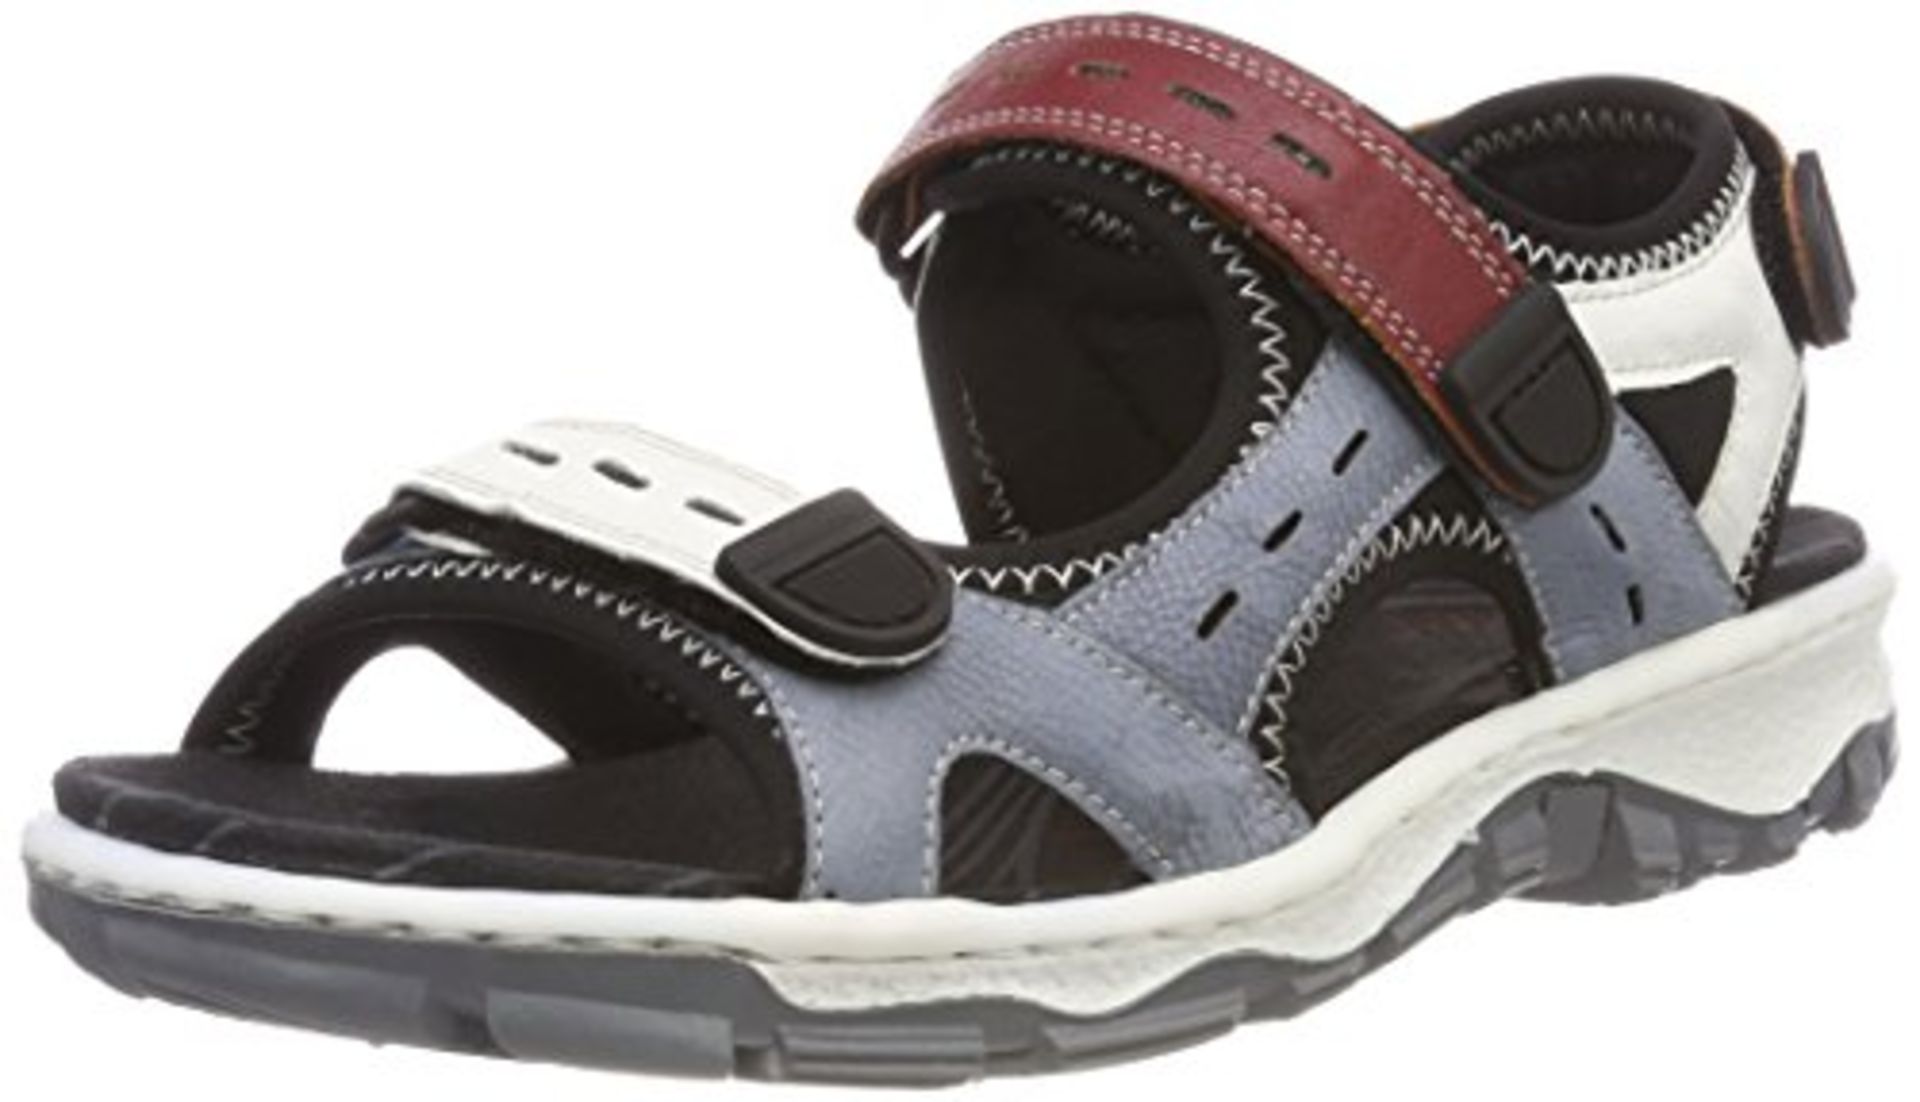 Rieker Women's 68872 Closed Toe Sandals, Mehrfarbig (Adria/Bianco/rosso/schwarz), 3.5 UK (36 EU)